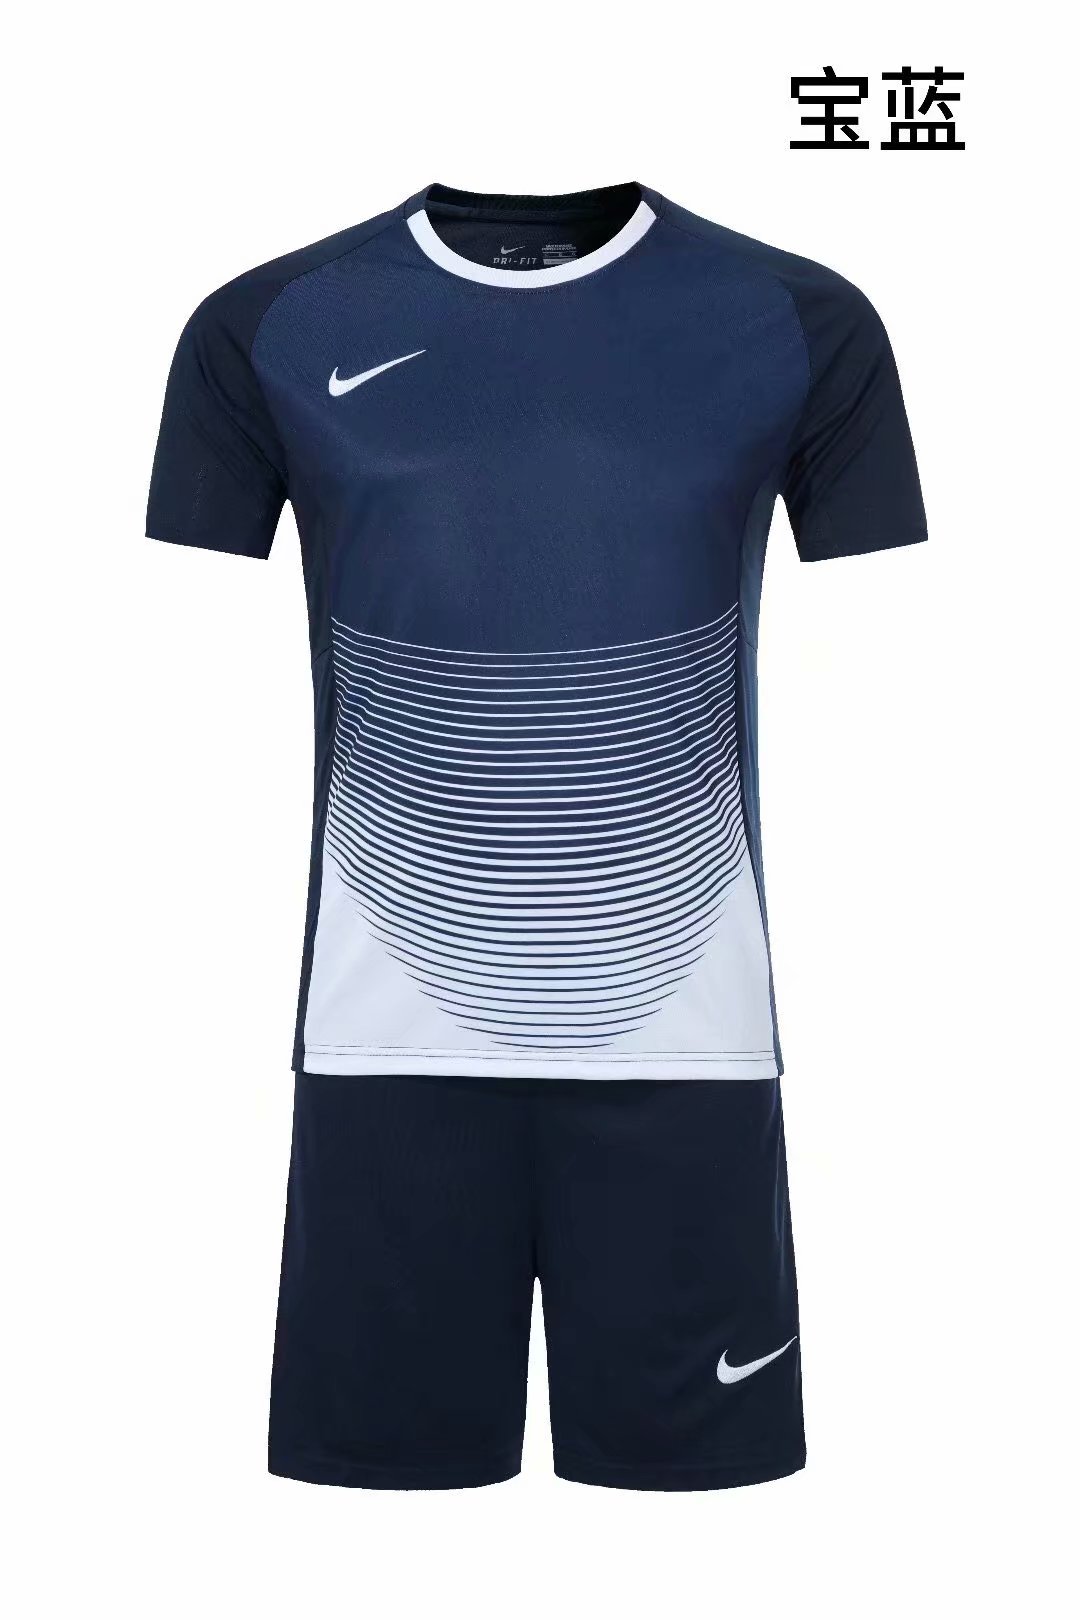 Nike Team Uniforms 001